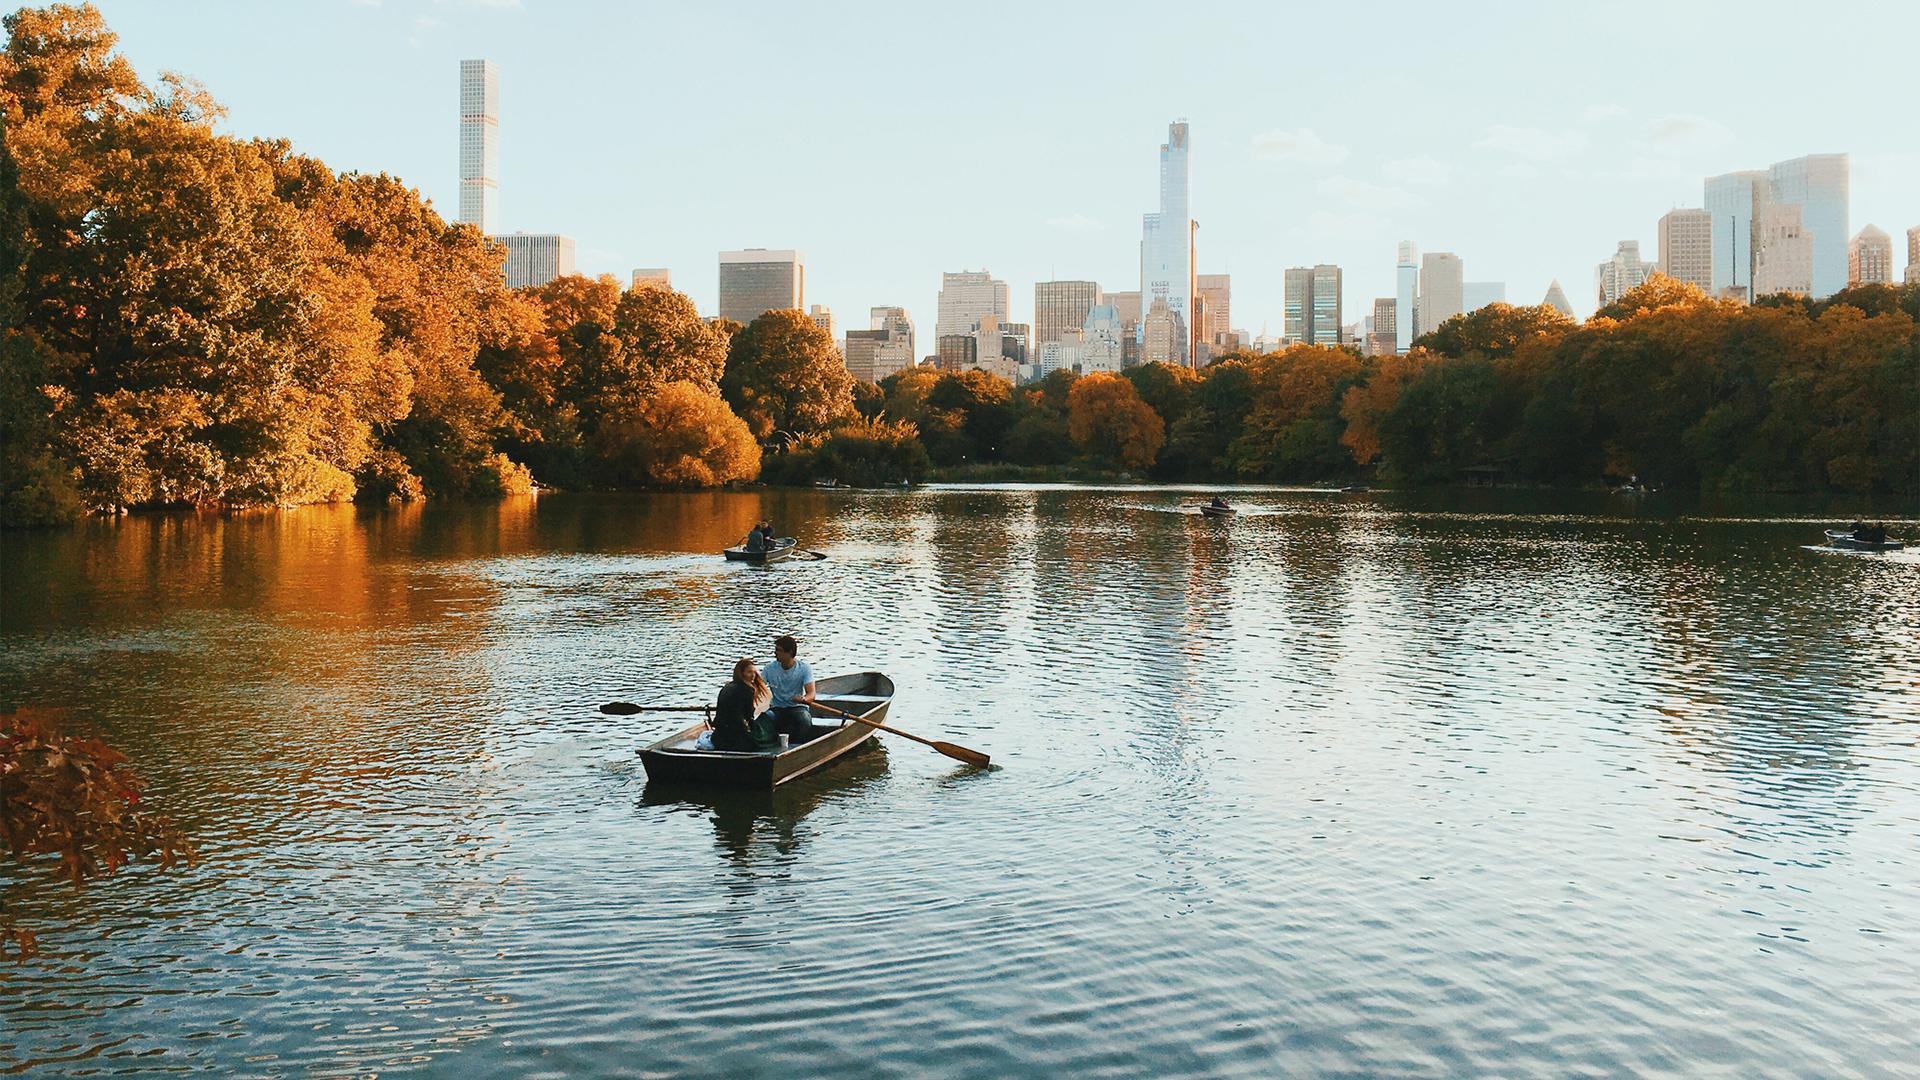 Rowing through Central Park